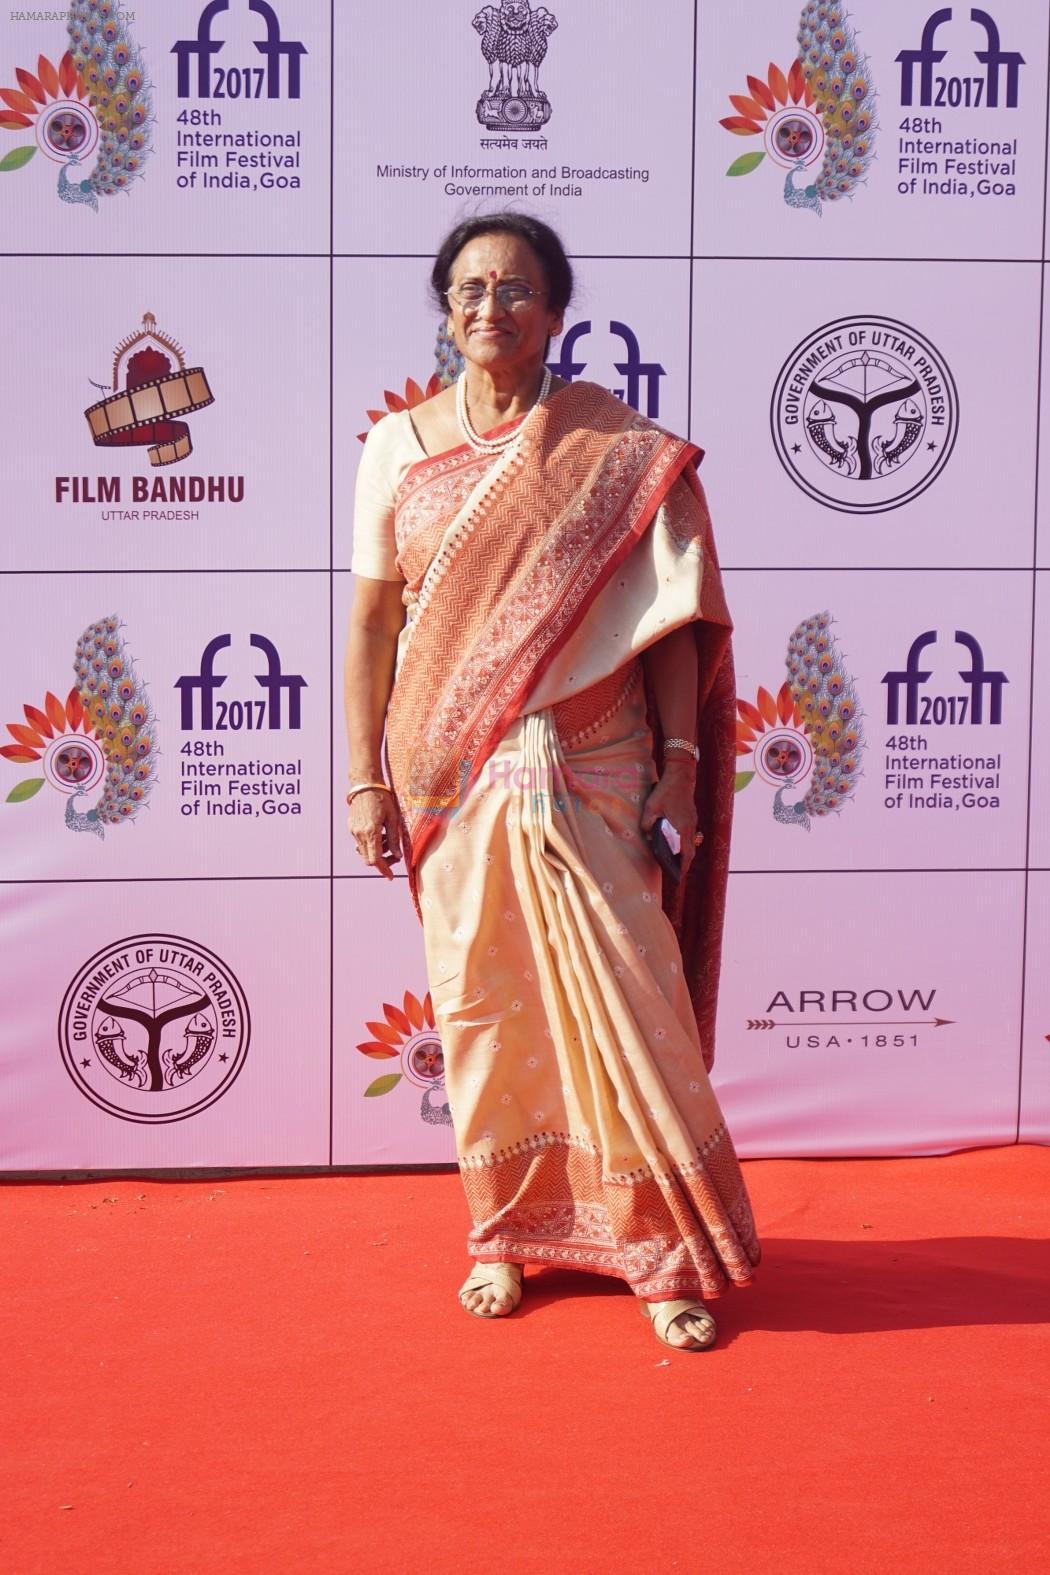 At IFFI 2017 Closing Ceremony in Mumbai on 28th Nov 2017